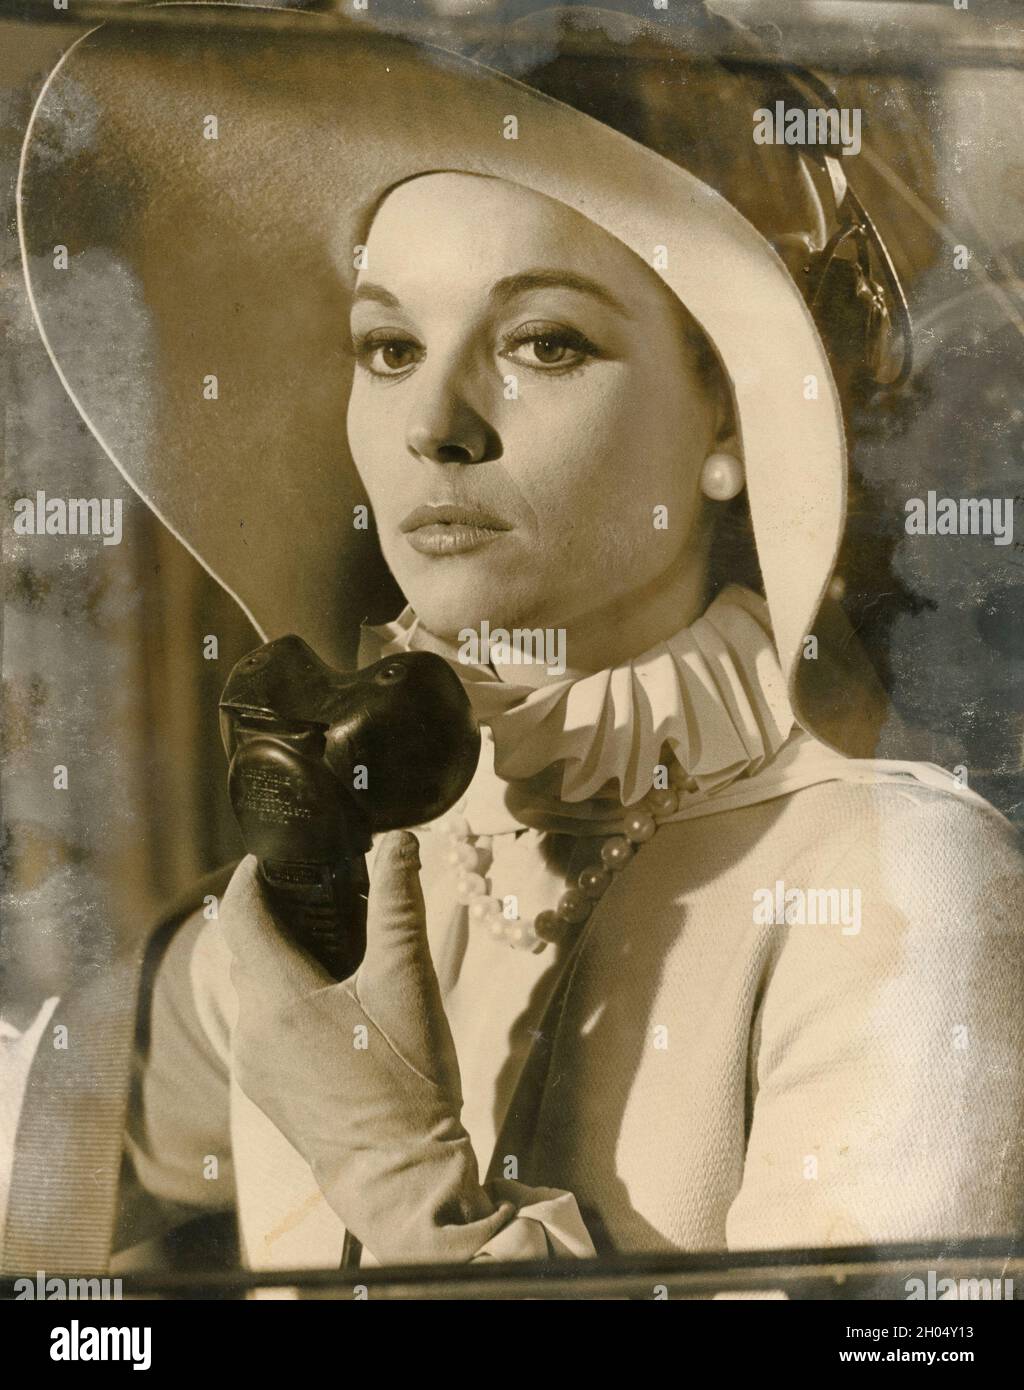 Actriz y modelo de moda italiana Elsa Martinelli, 1970s Foto de stock